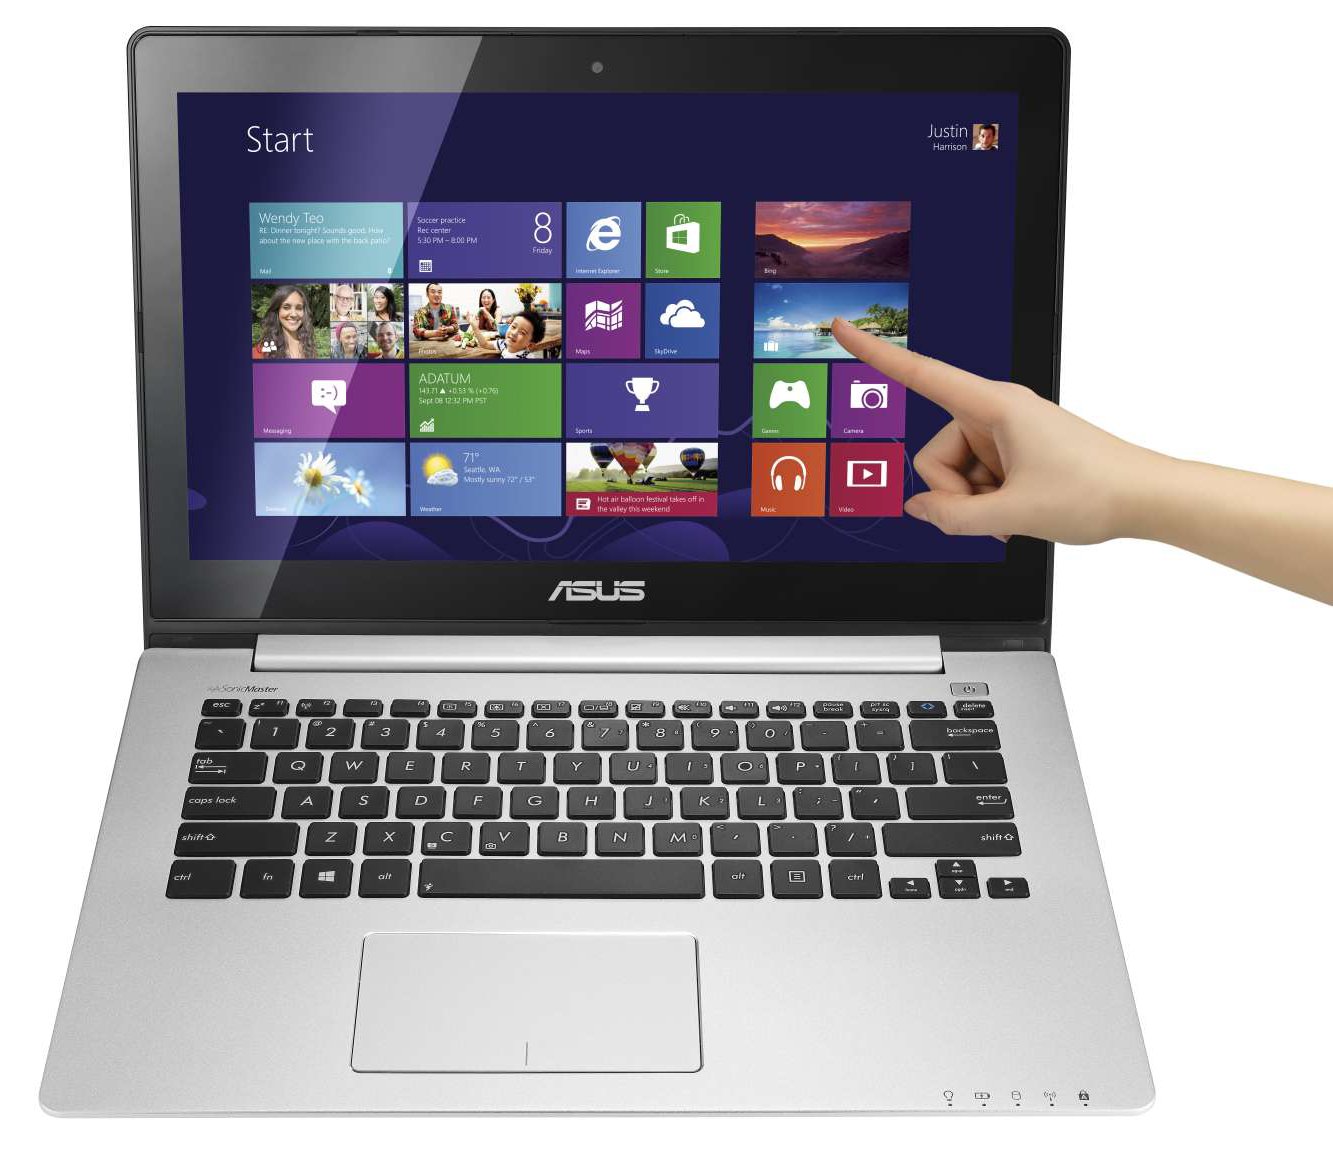 ASUS VivoBook S451LN Notebook